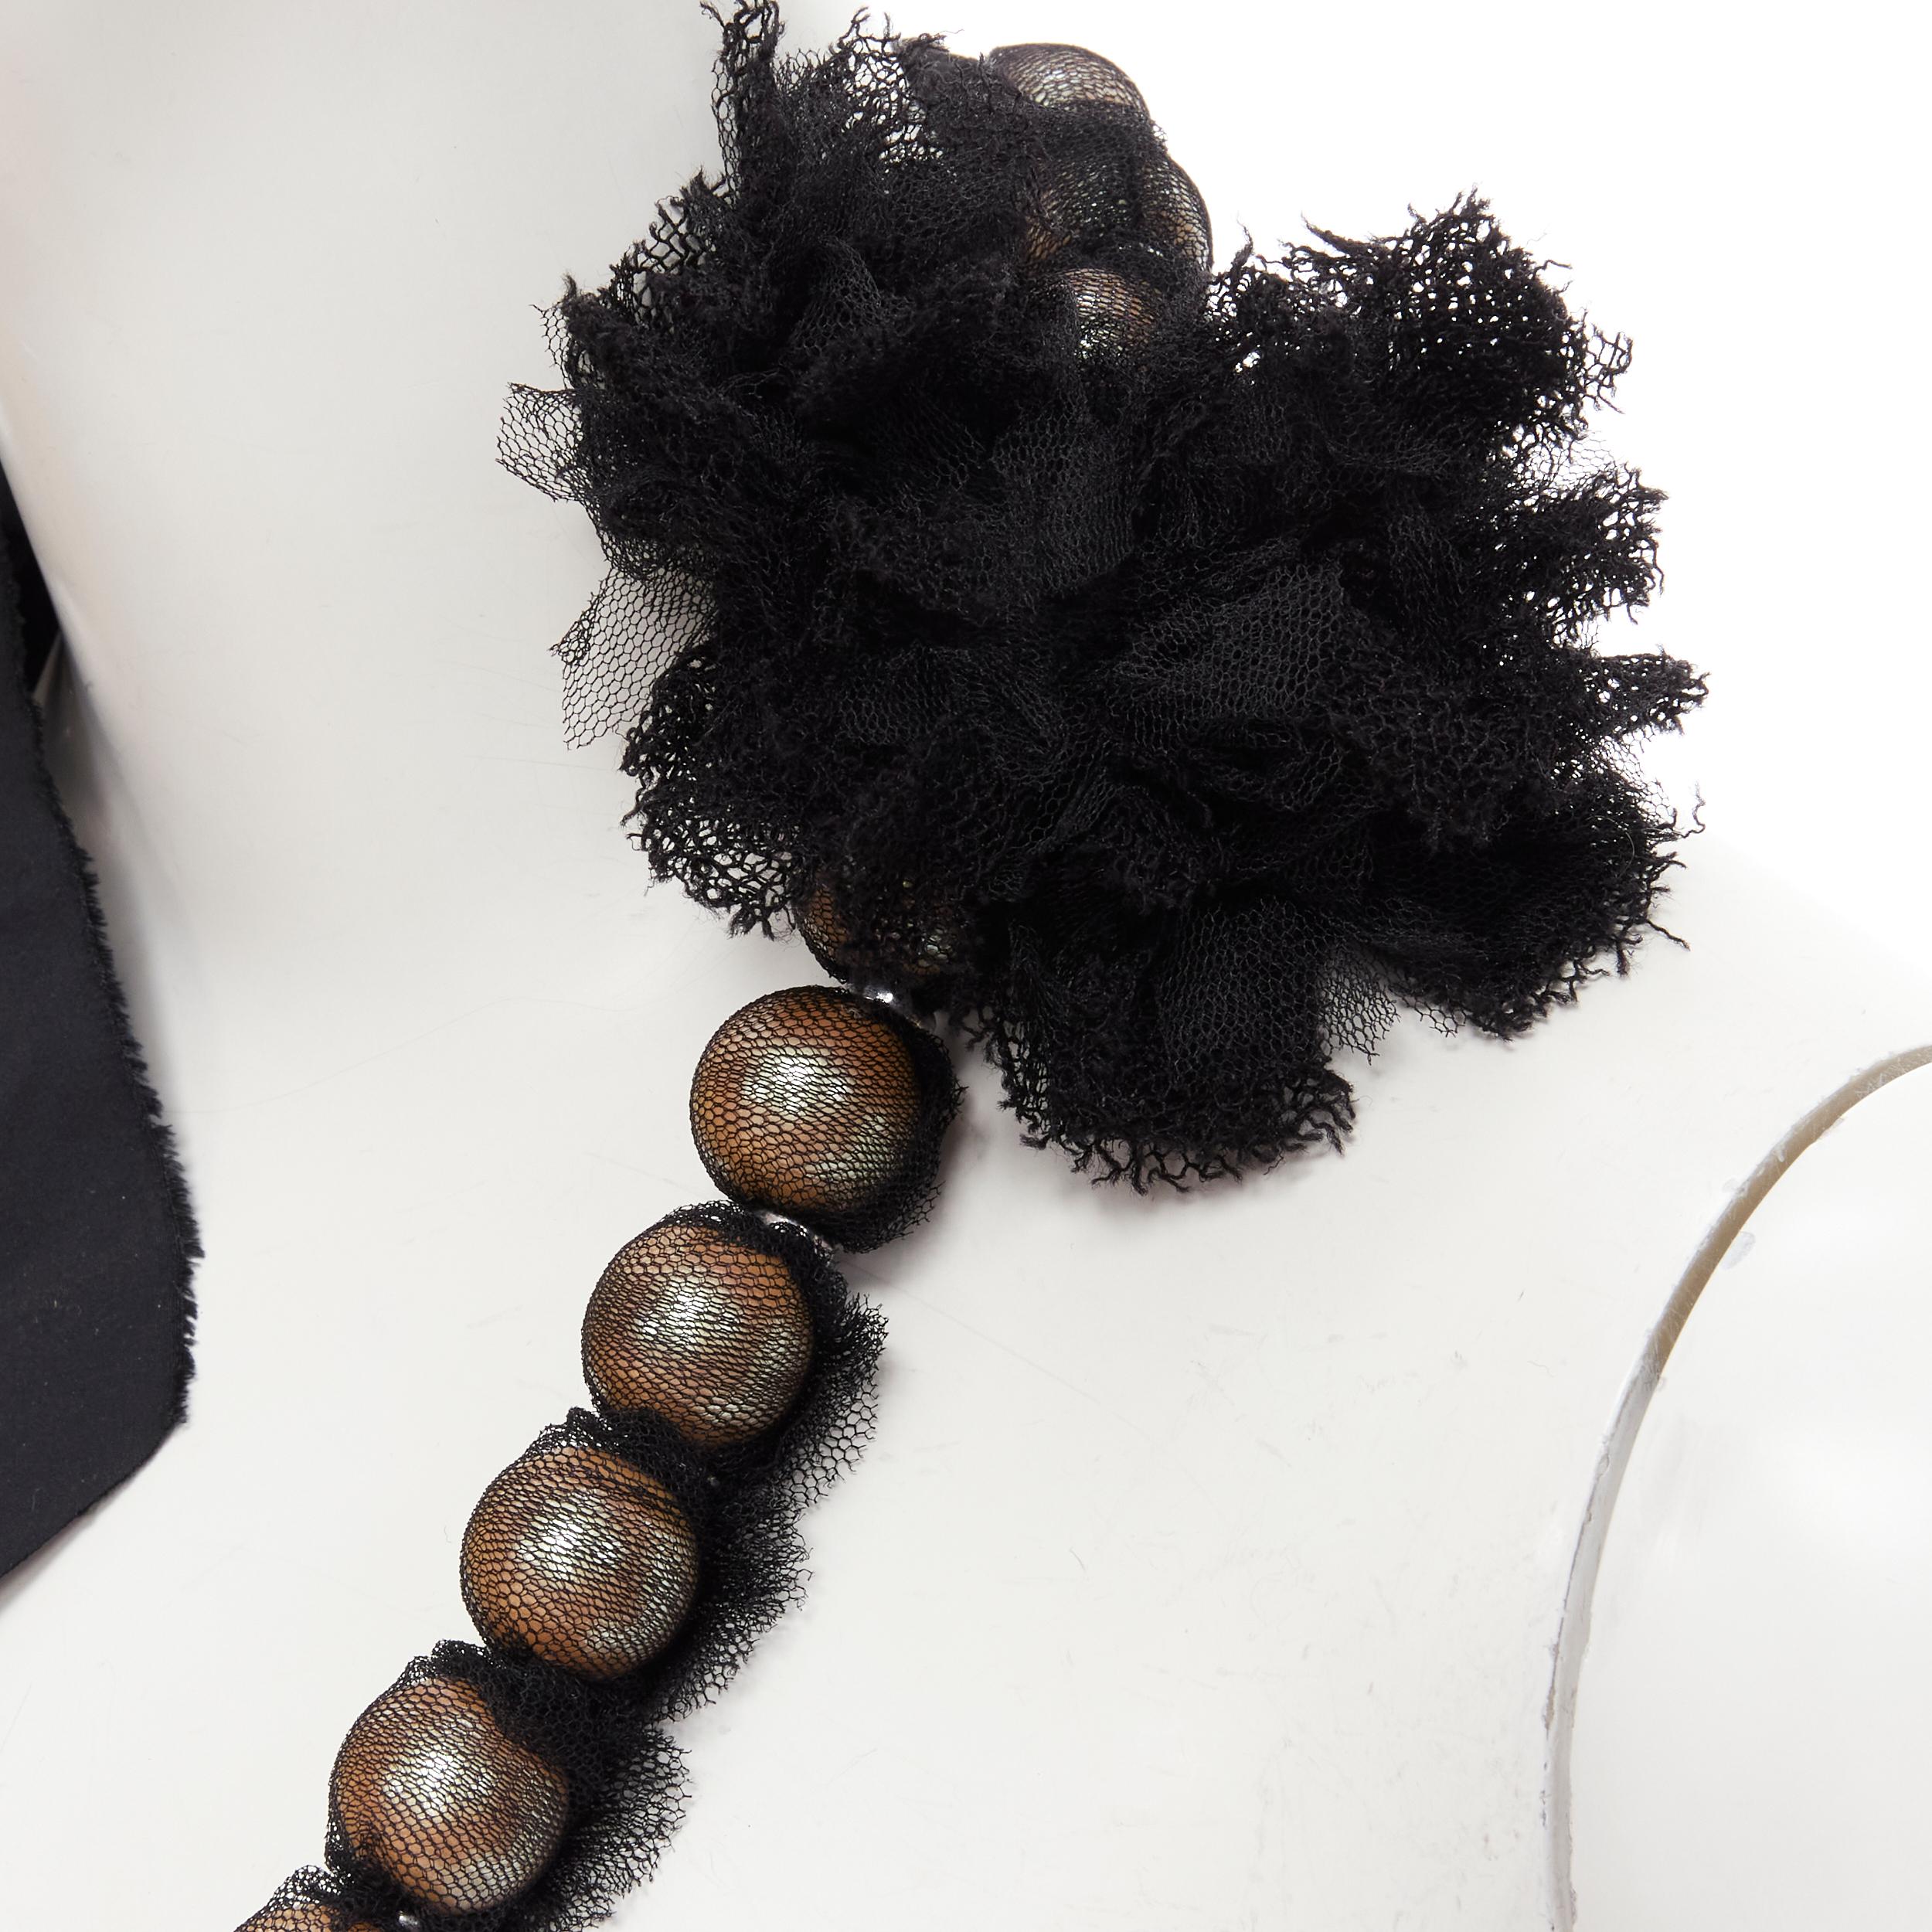 LANVIN Vintage Alber Elbaz black net wrapped pearl grosgrain ribbon necklace
Brand: Lanvin
Designer: Alber Elbaz
Material: Pearl
Color: Black
Pattern: Solid
Extra Detail: Self tie grosgrain ribbon.

CONDITION:
Condition: Excellent, this item was